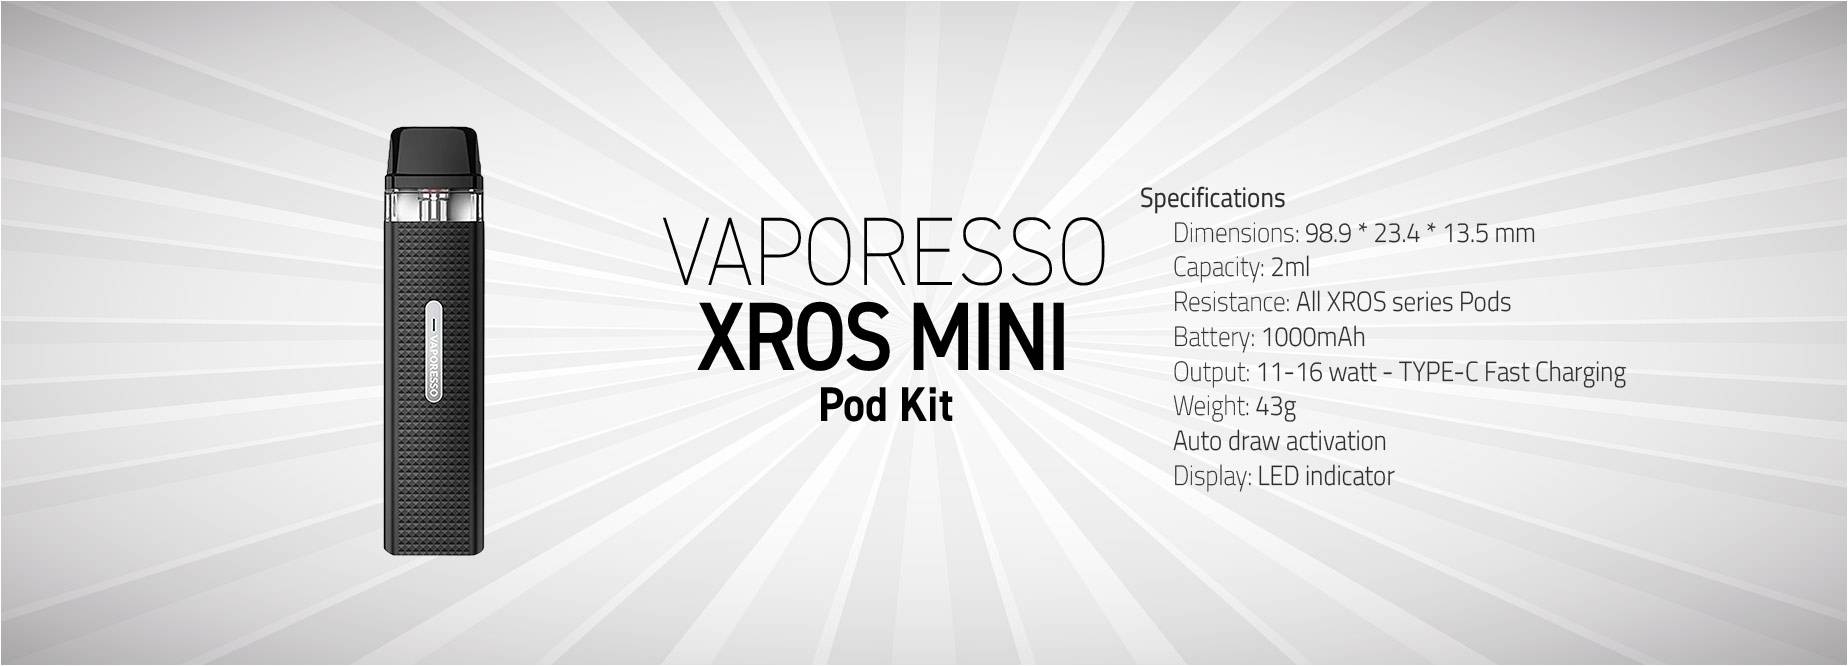 XROS Mini Pod